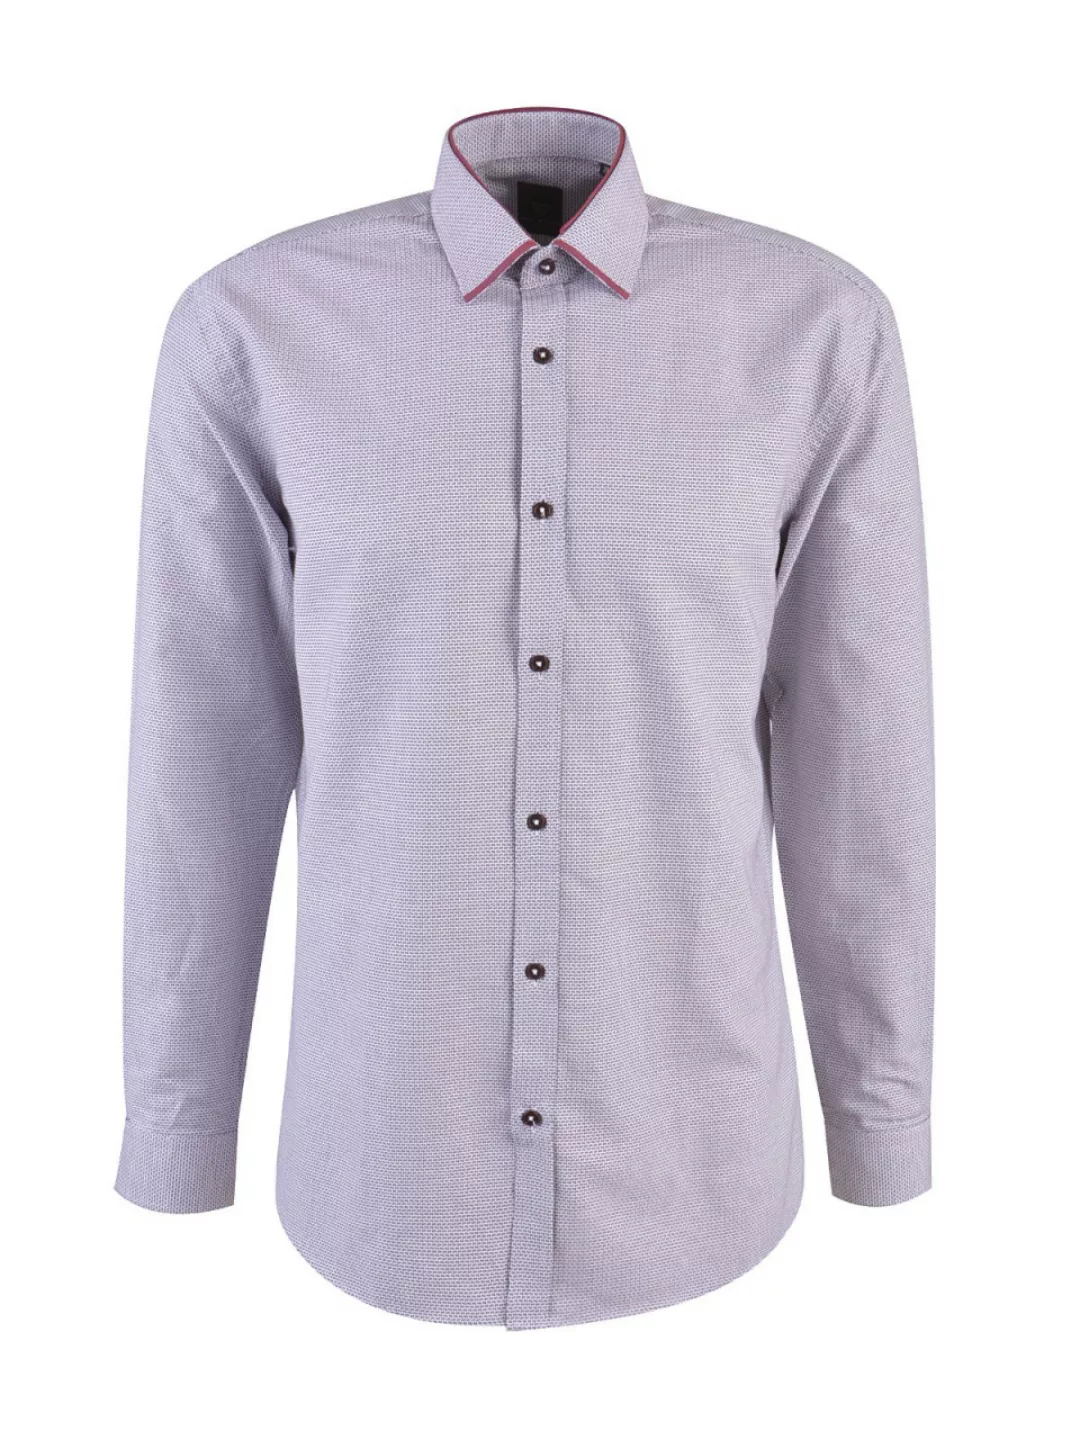 MILANO ITALY Herren Hemd, lila günstig online kaufen